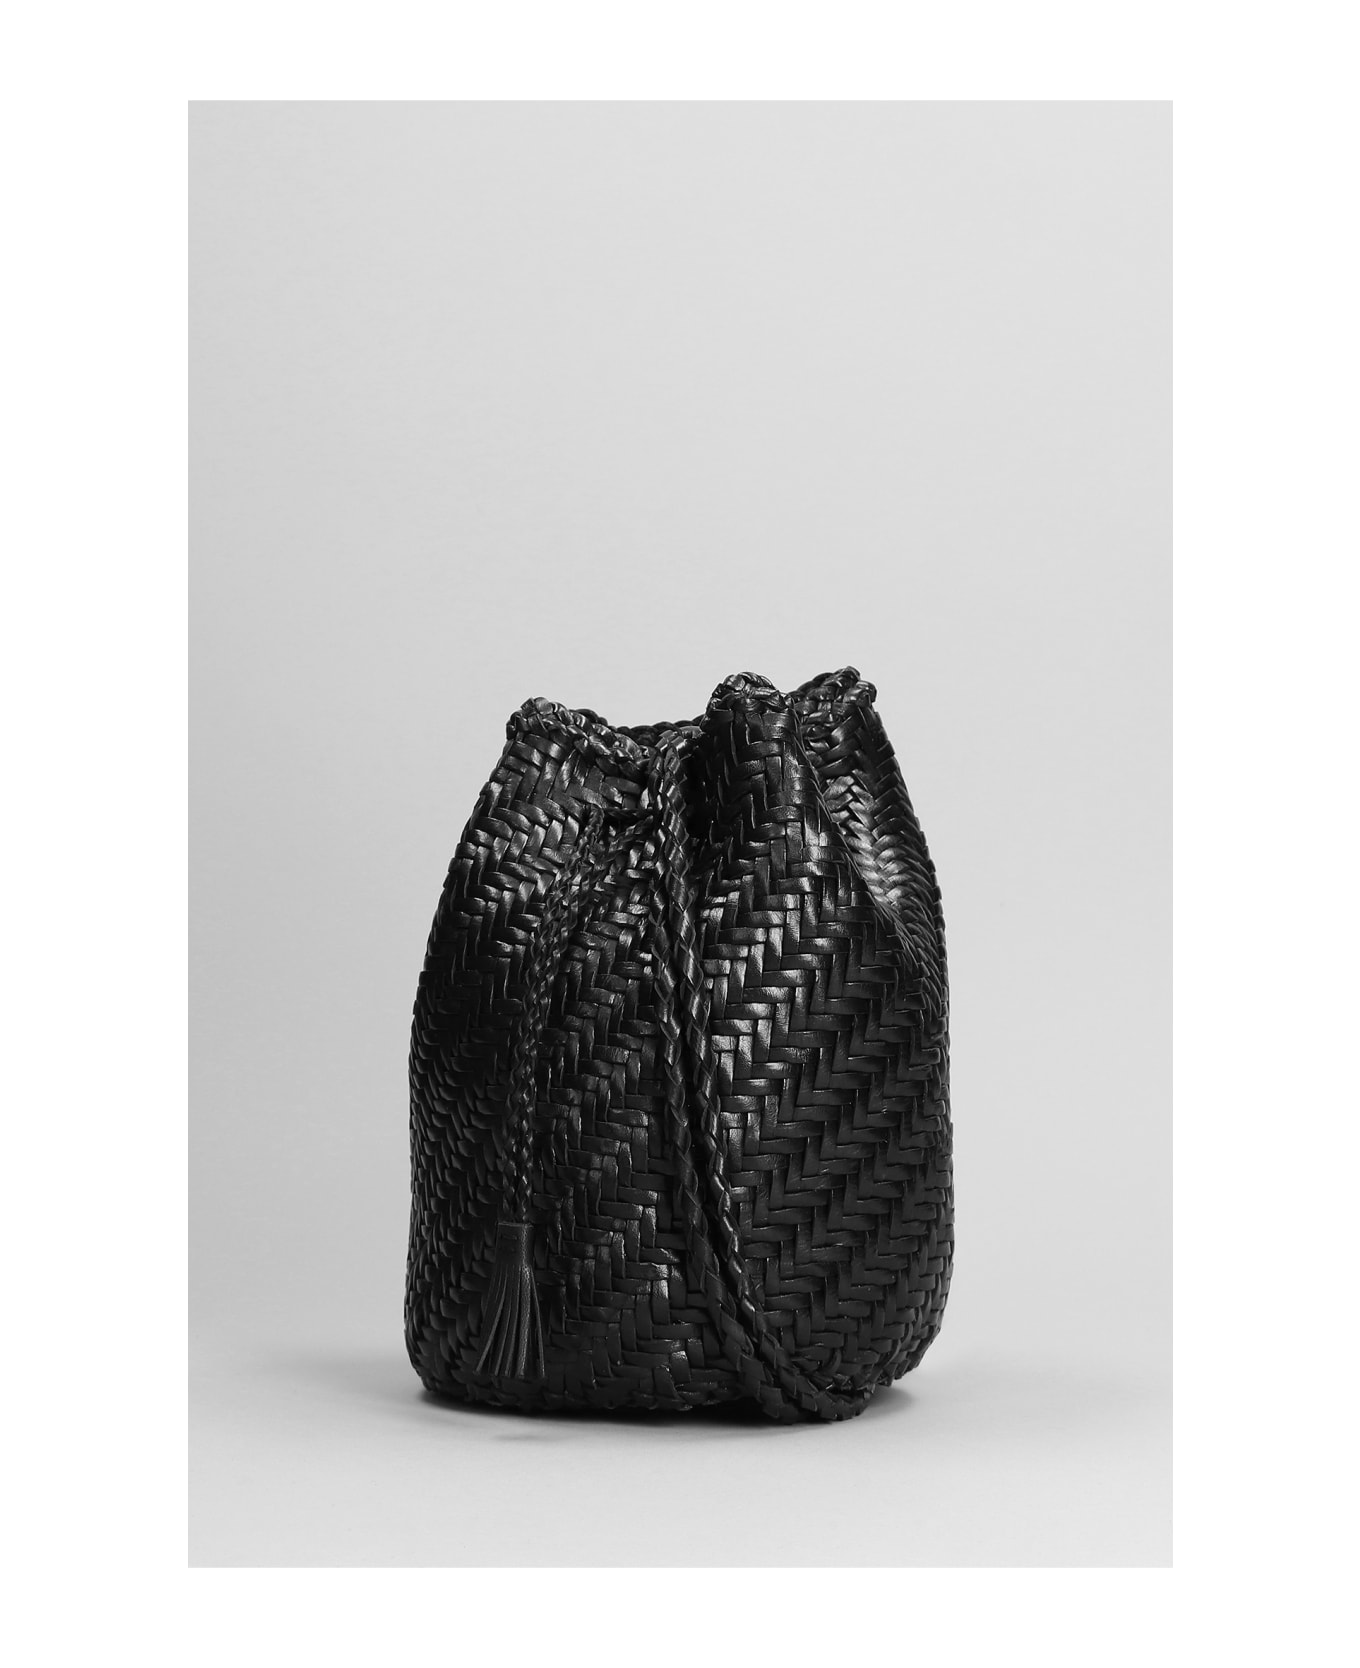 Dragon Diffusion Pompom Double Shoulder Bag In Black Leather - black